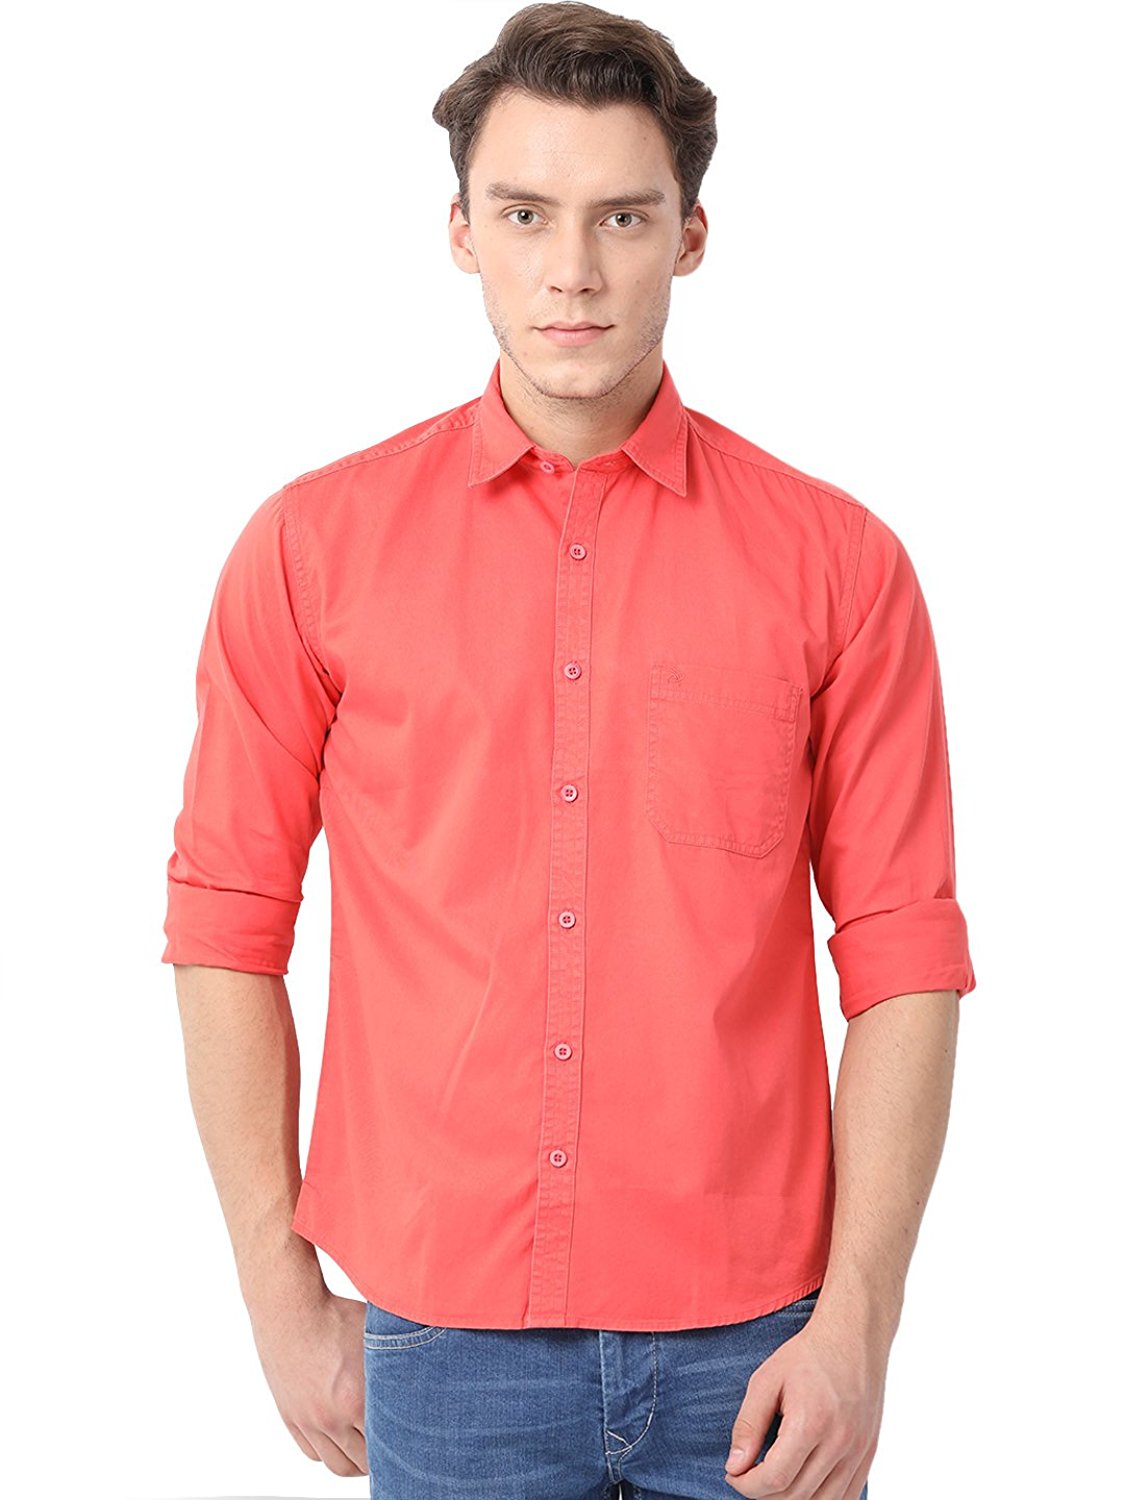 Pan American Red Formal Shirts for Men's 